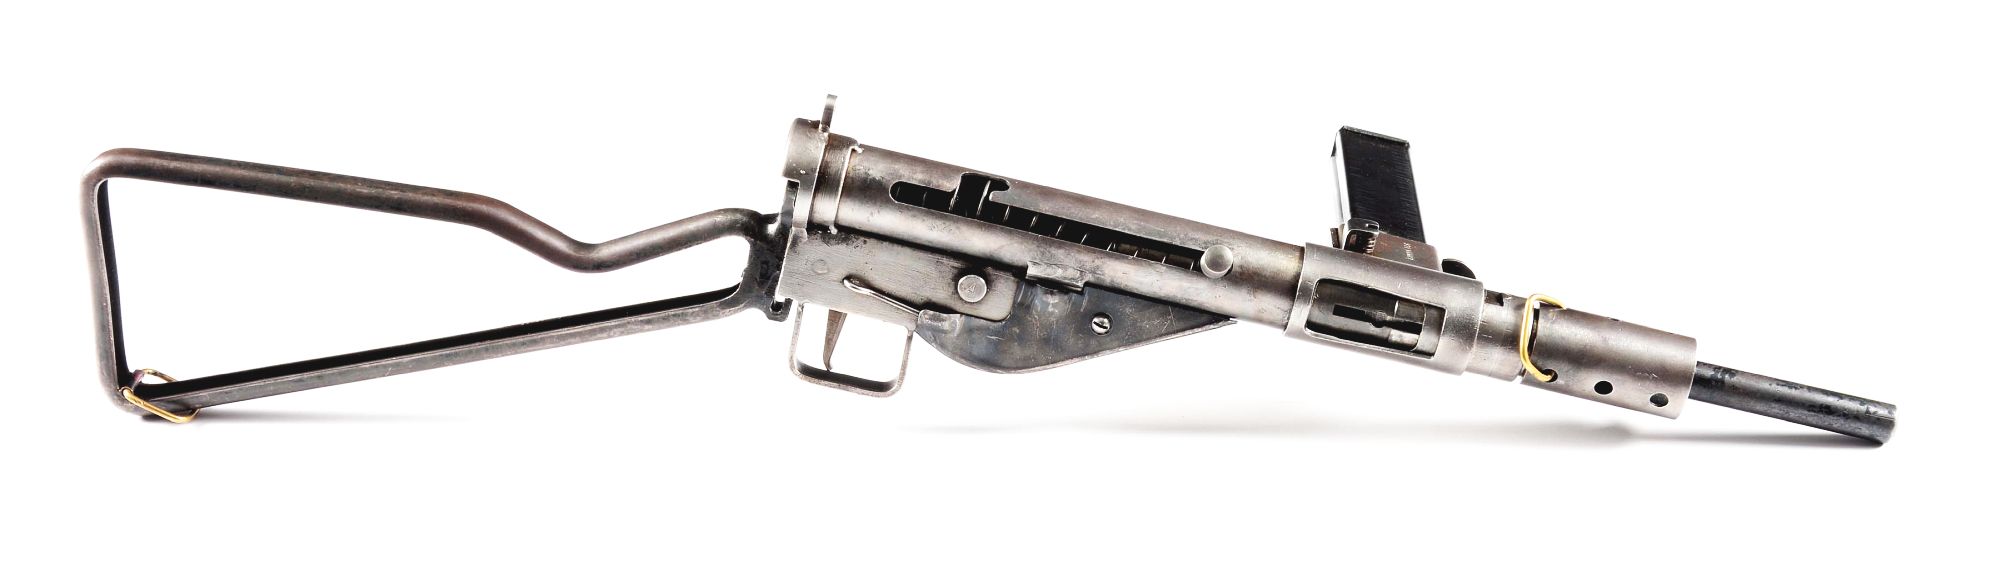 N) ORIGINAL BRITISH STEN MK II MACHINE GUN WITH | Proxibid